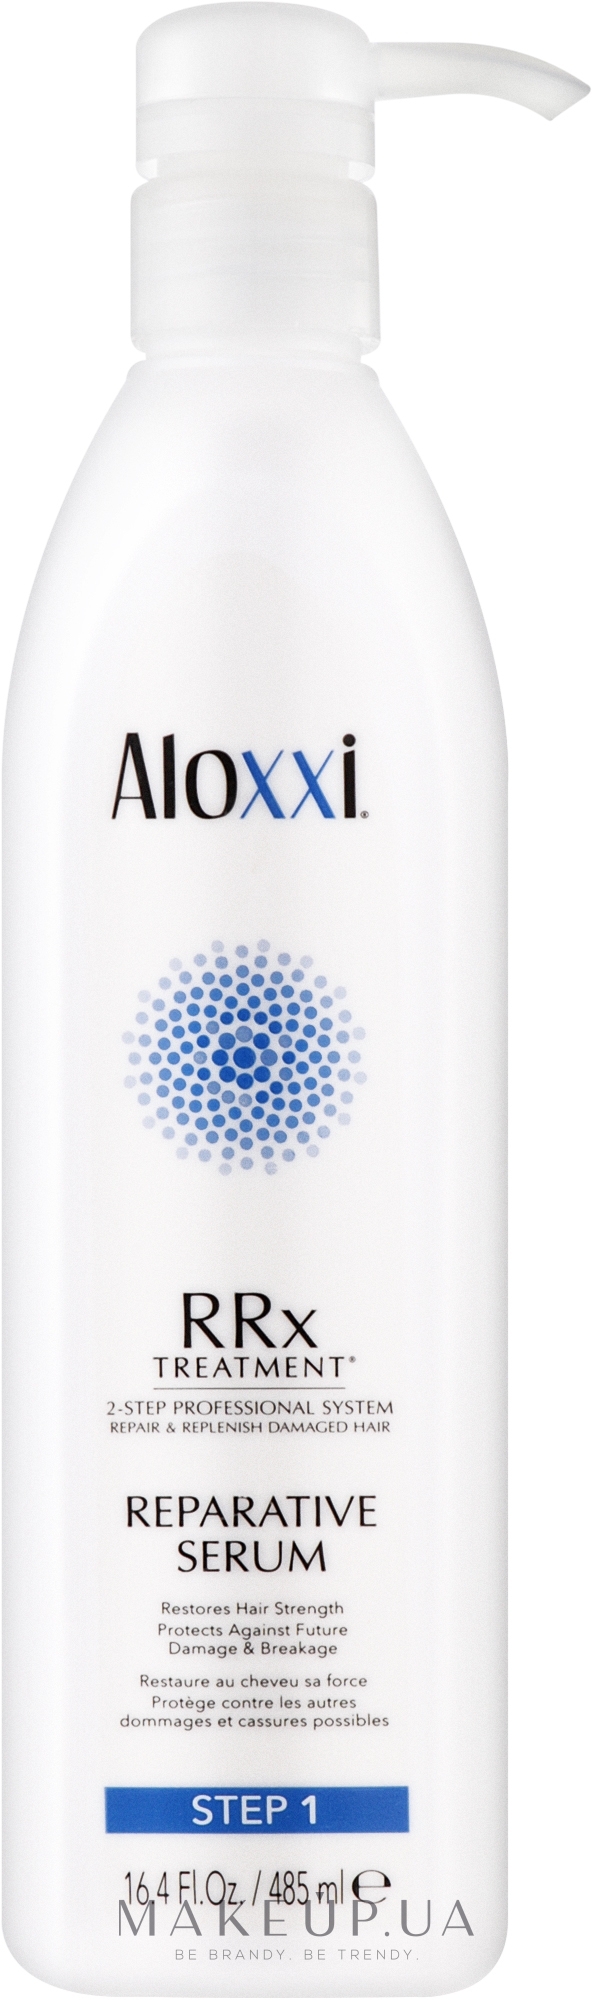 Восстанавливающая сыворотка для волос - Aloxxi Rrx Treatment Reparative Serum — фото 485ml